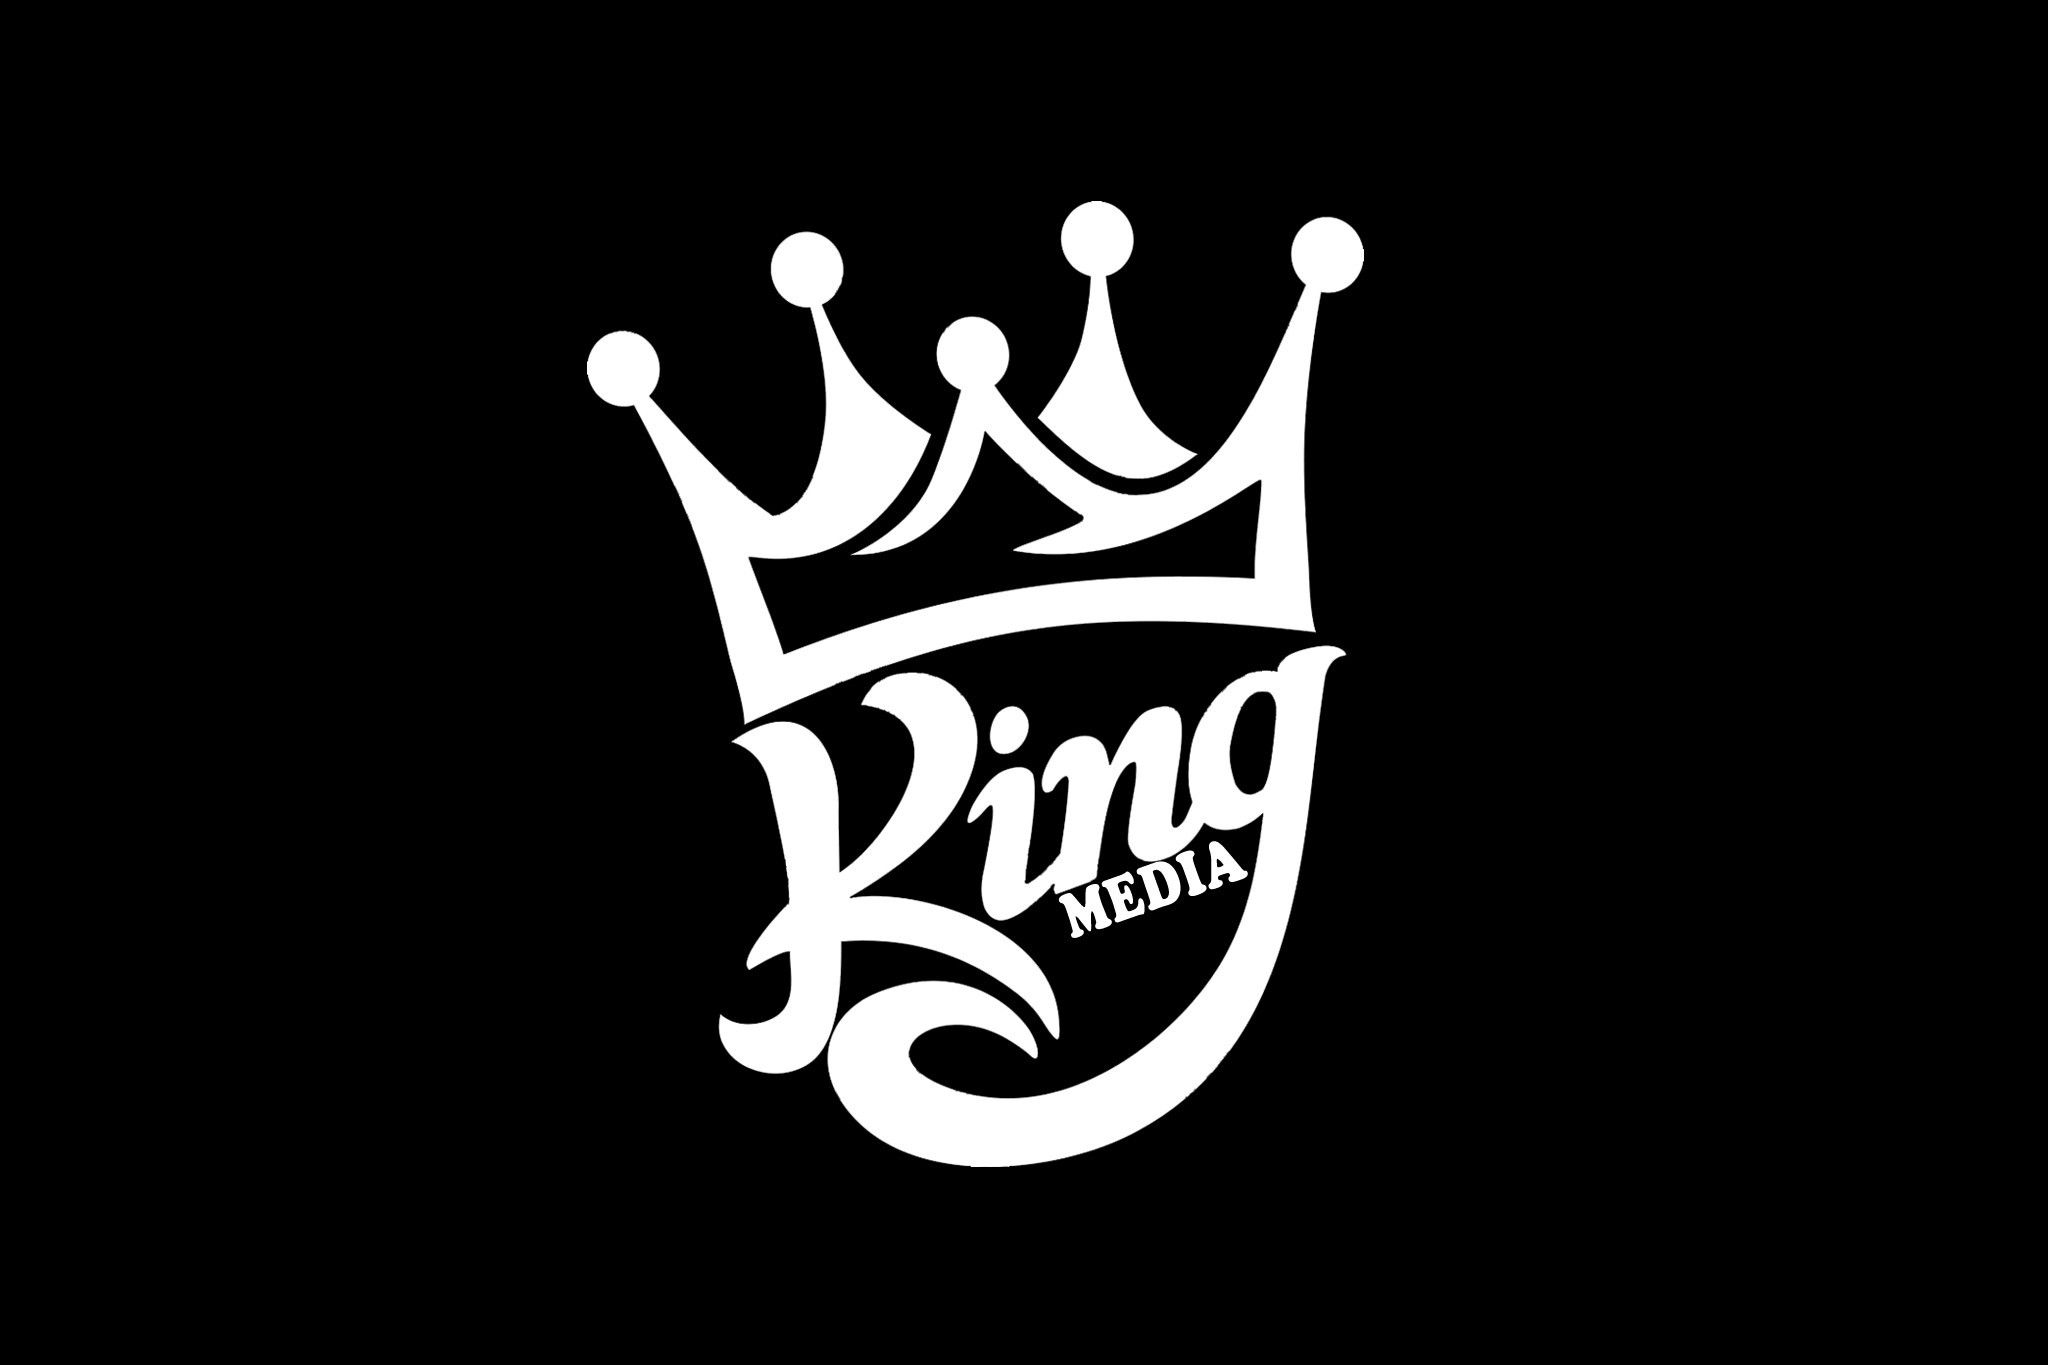 Last Kings Logo Wallpapers On Wallpaperdog